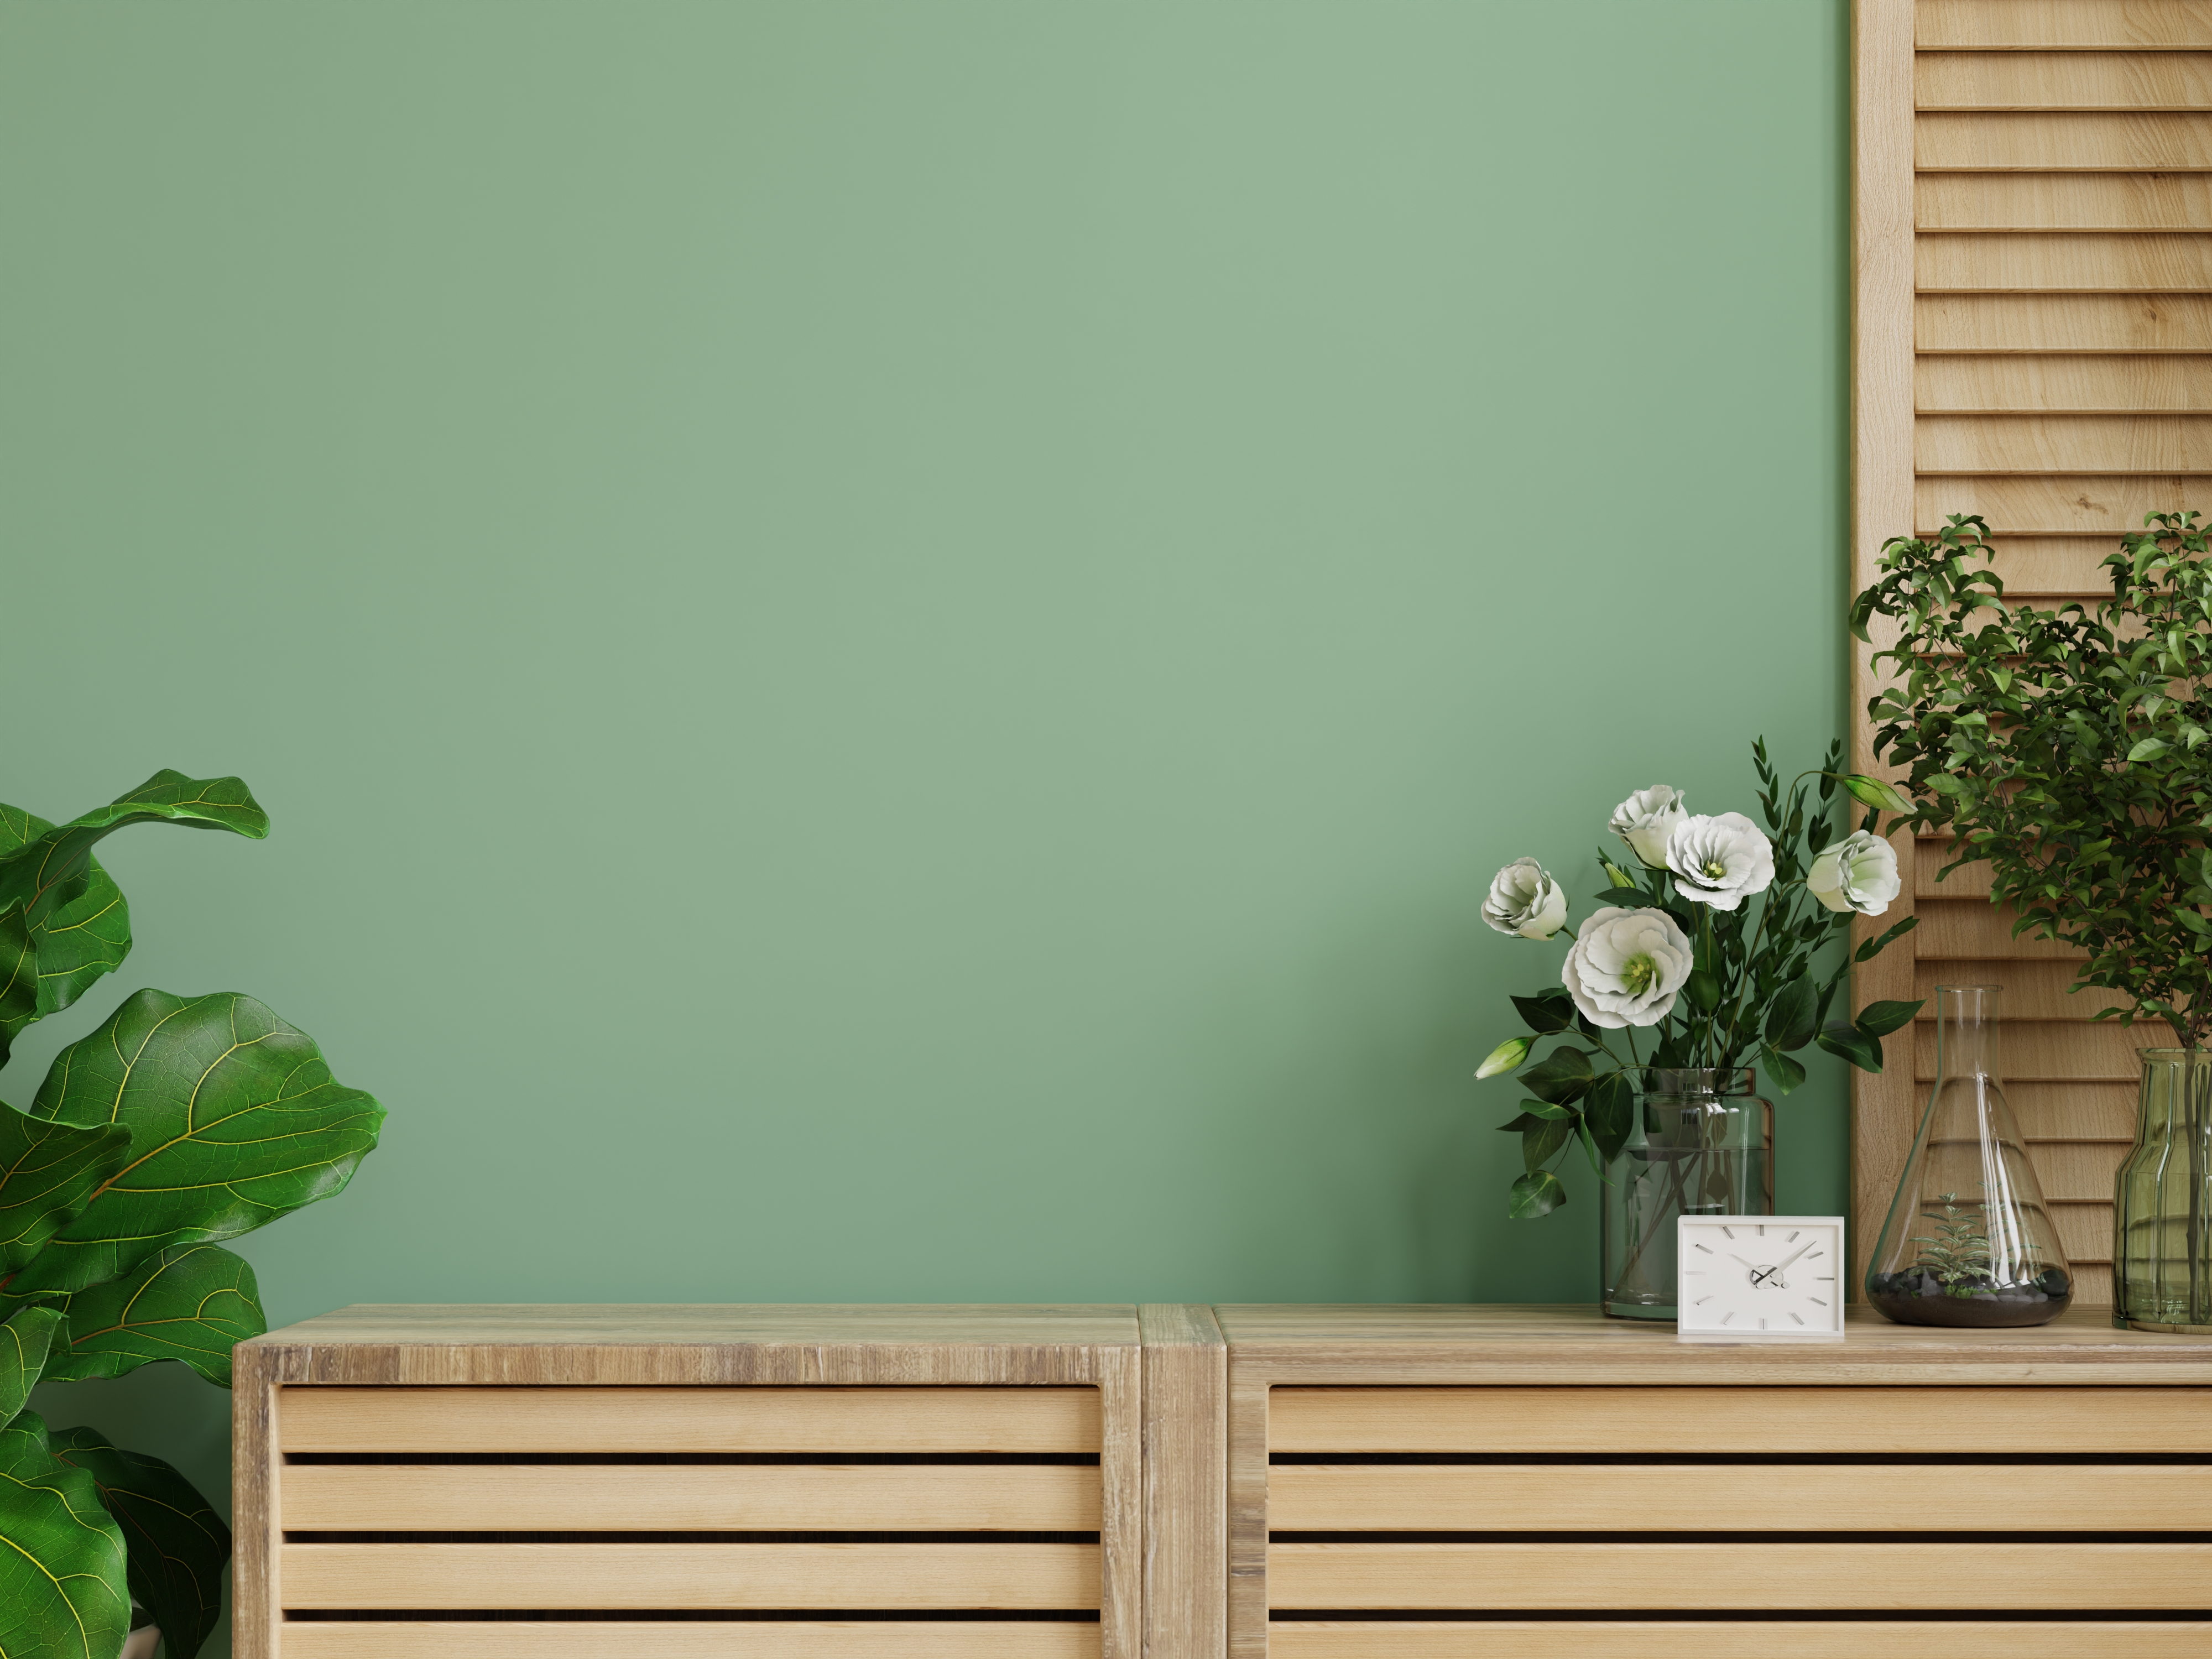 interior-wall-mockup-with-green-plant-green-wall-shelf-3d-rendering.jpg